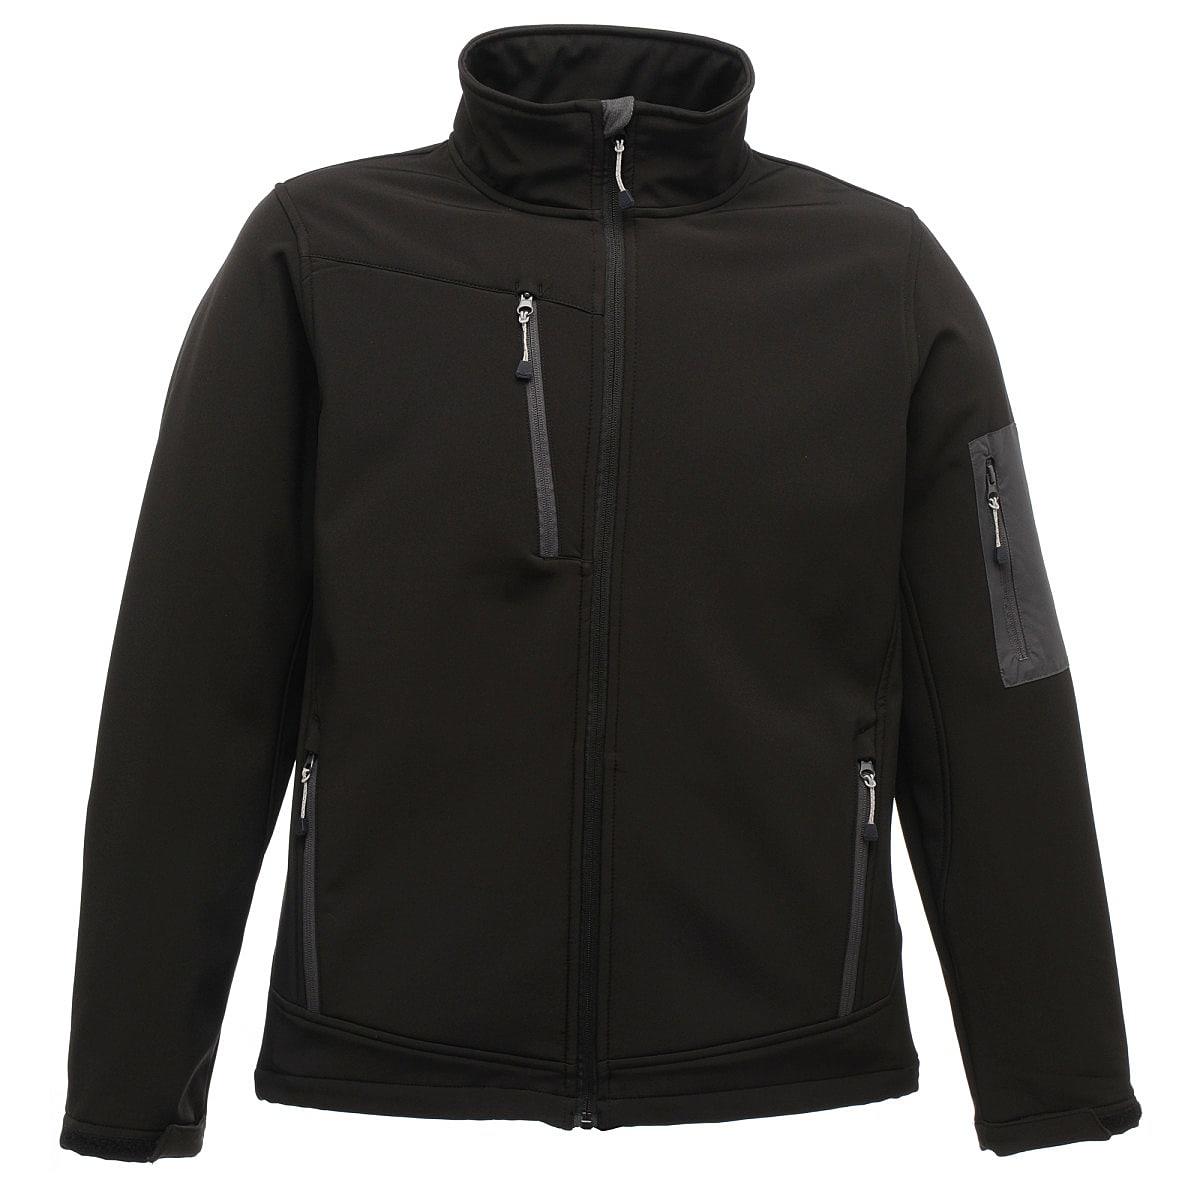 Regatta Arcola Softshell Jacket in Black / Seal Grey (Product Code: TRA674)